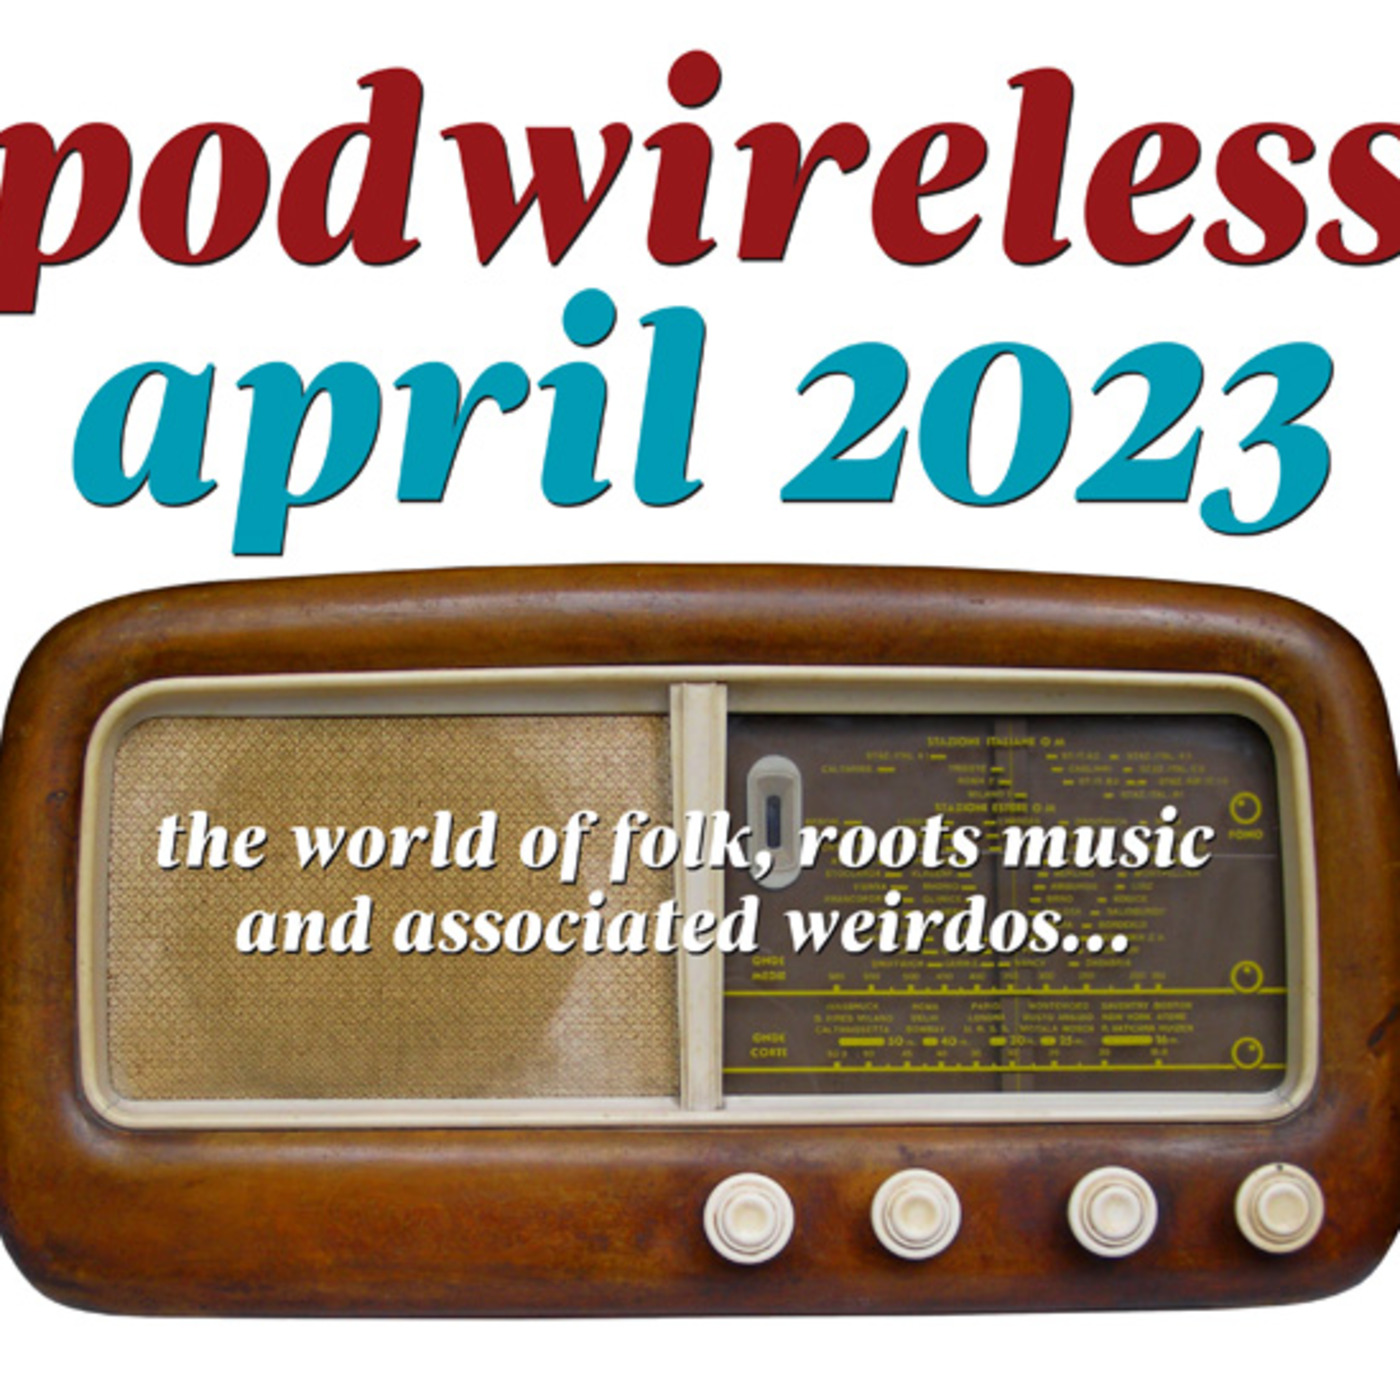 Podwireless 248 April 2023